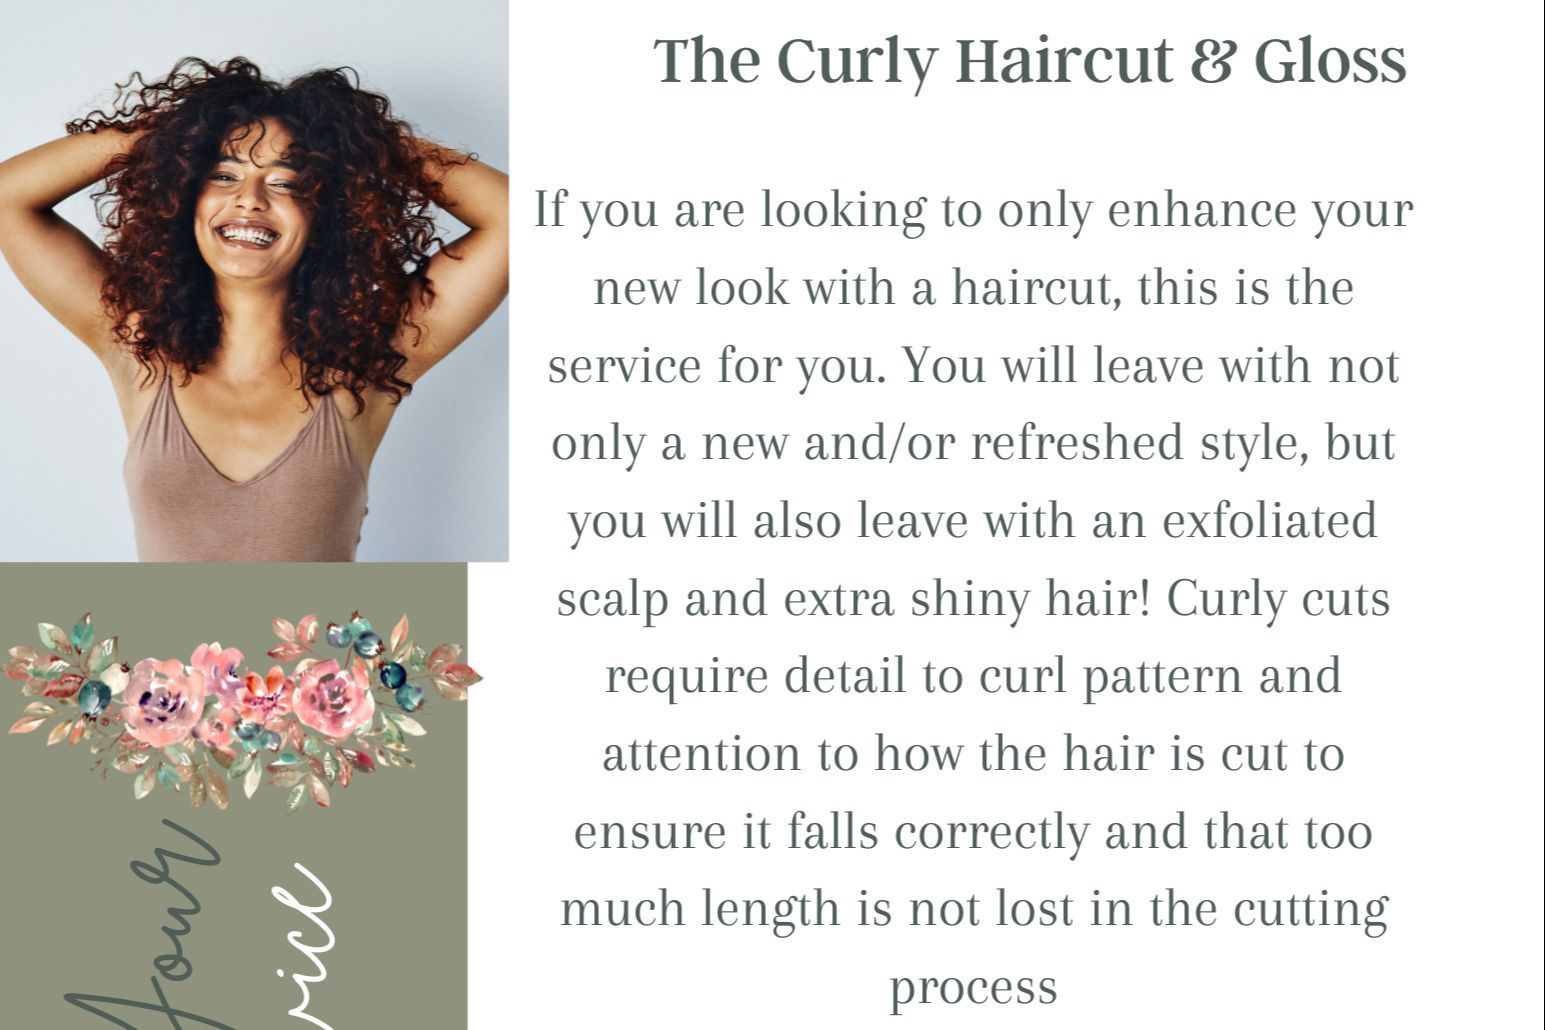 The Curly Haircut & Gloss portfolio